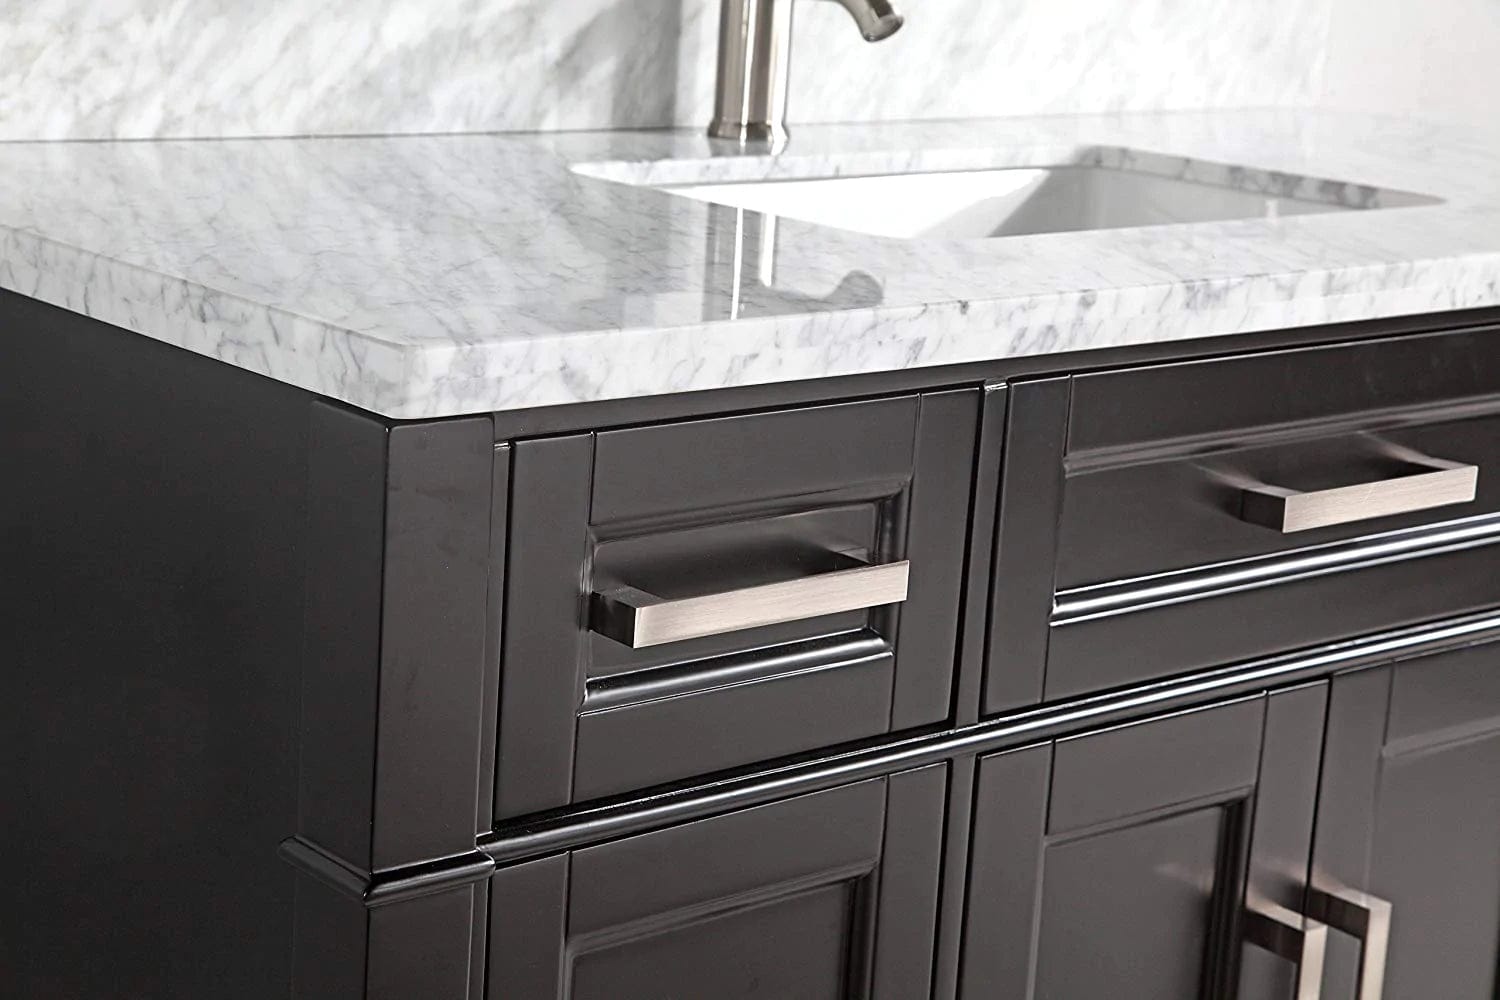 48 in. Single Sink Bathroom Vanity Set in Espresso,Carrara Marble Stone Top - Decohub Home